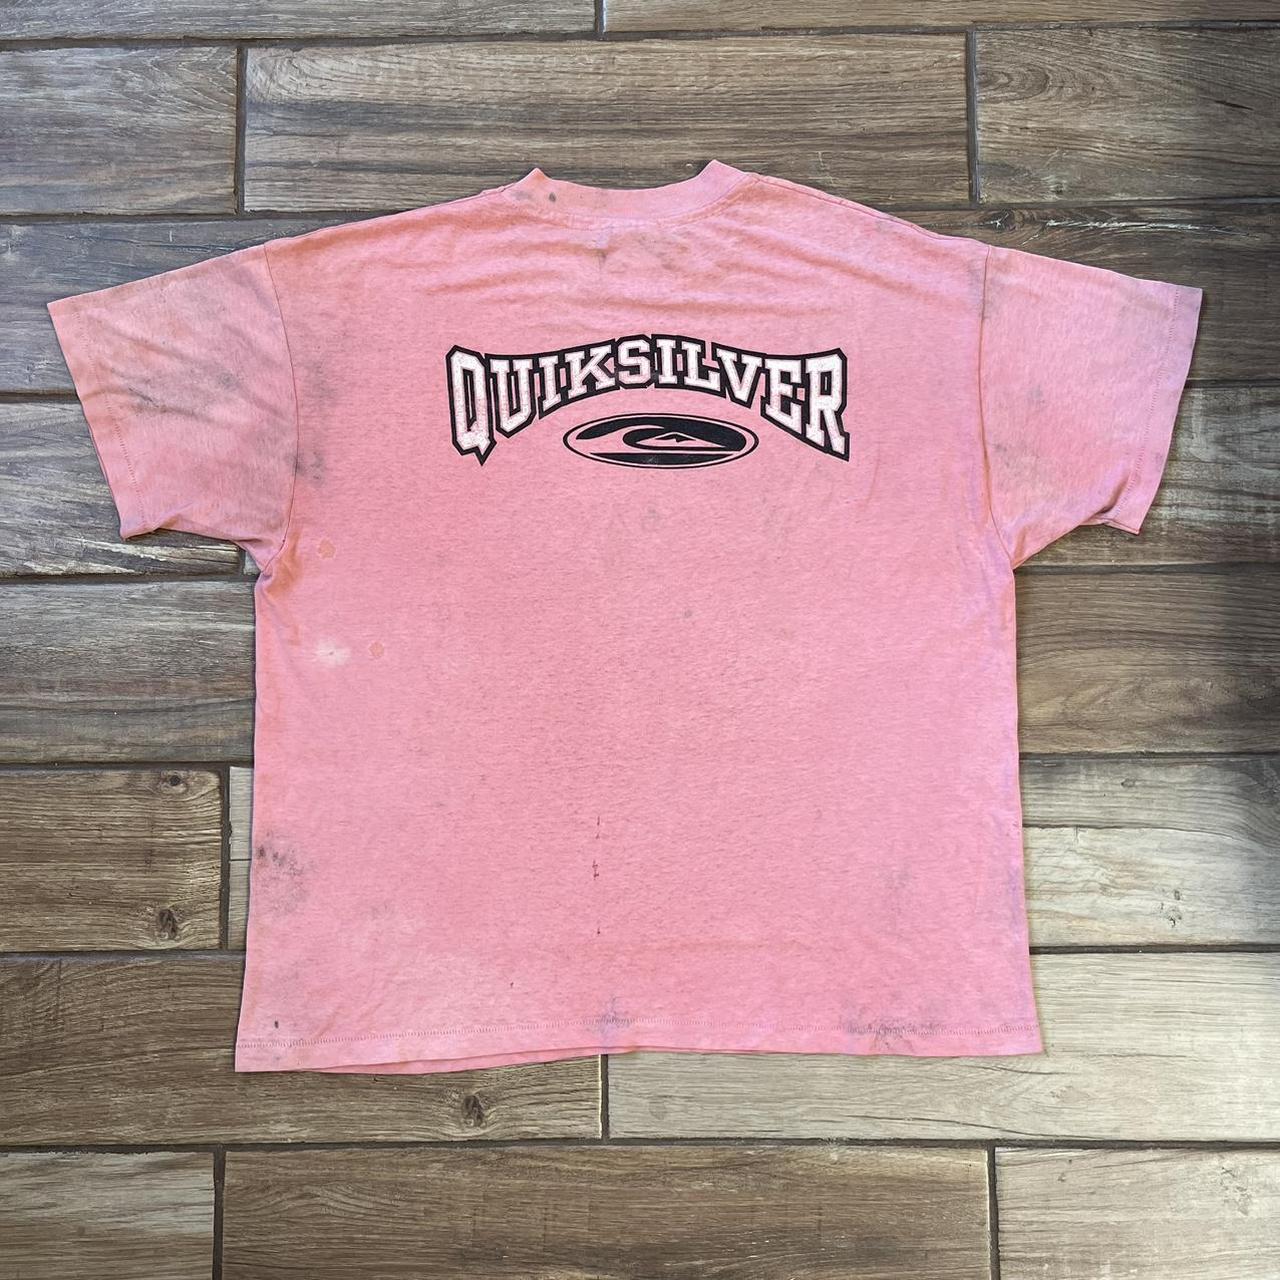 Quiksilver Men's Pink and Black T-shirt